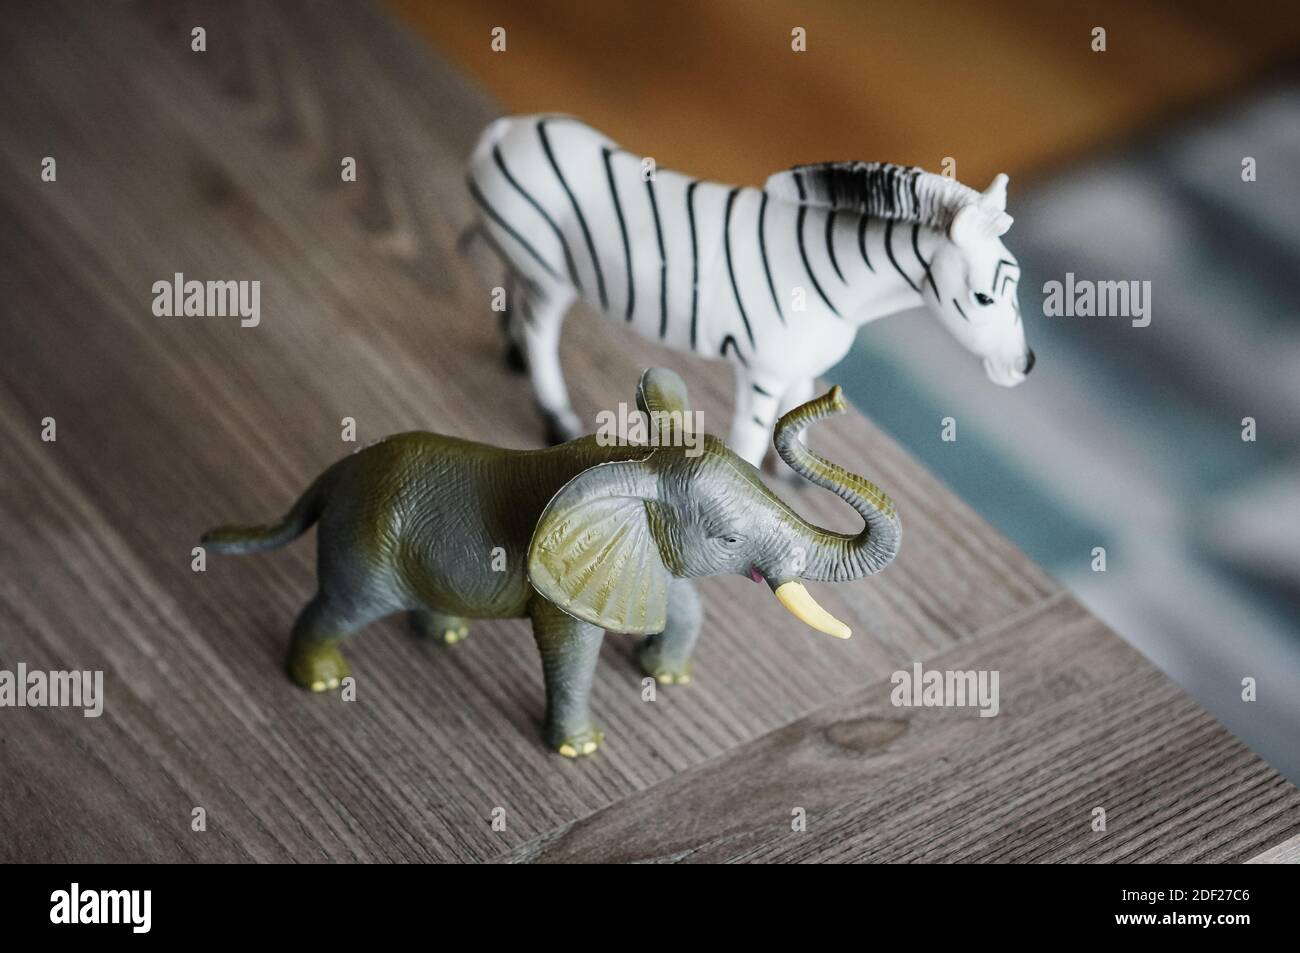 A closeup shot of plastic elephant and zebra toys Stock Photo